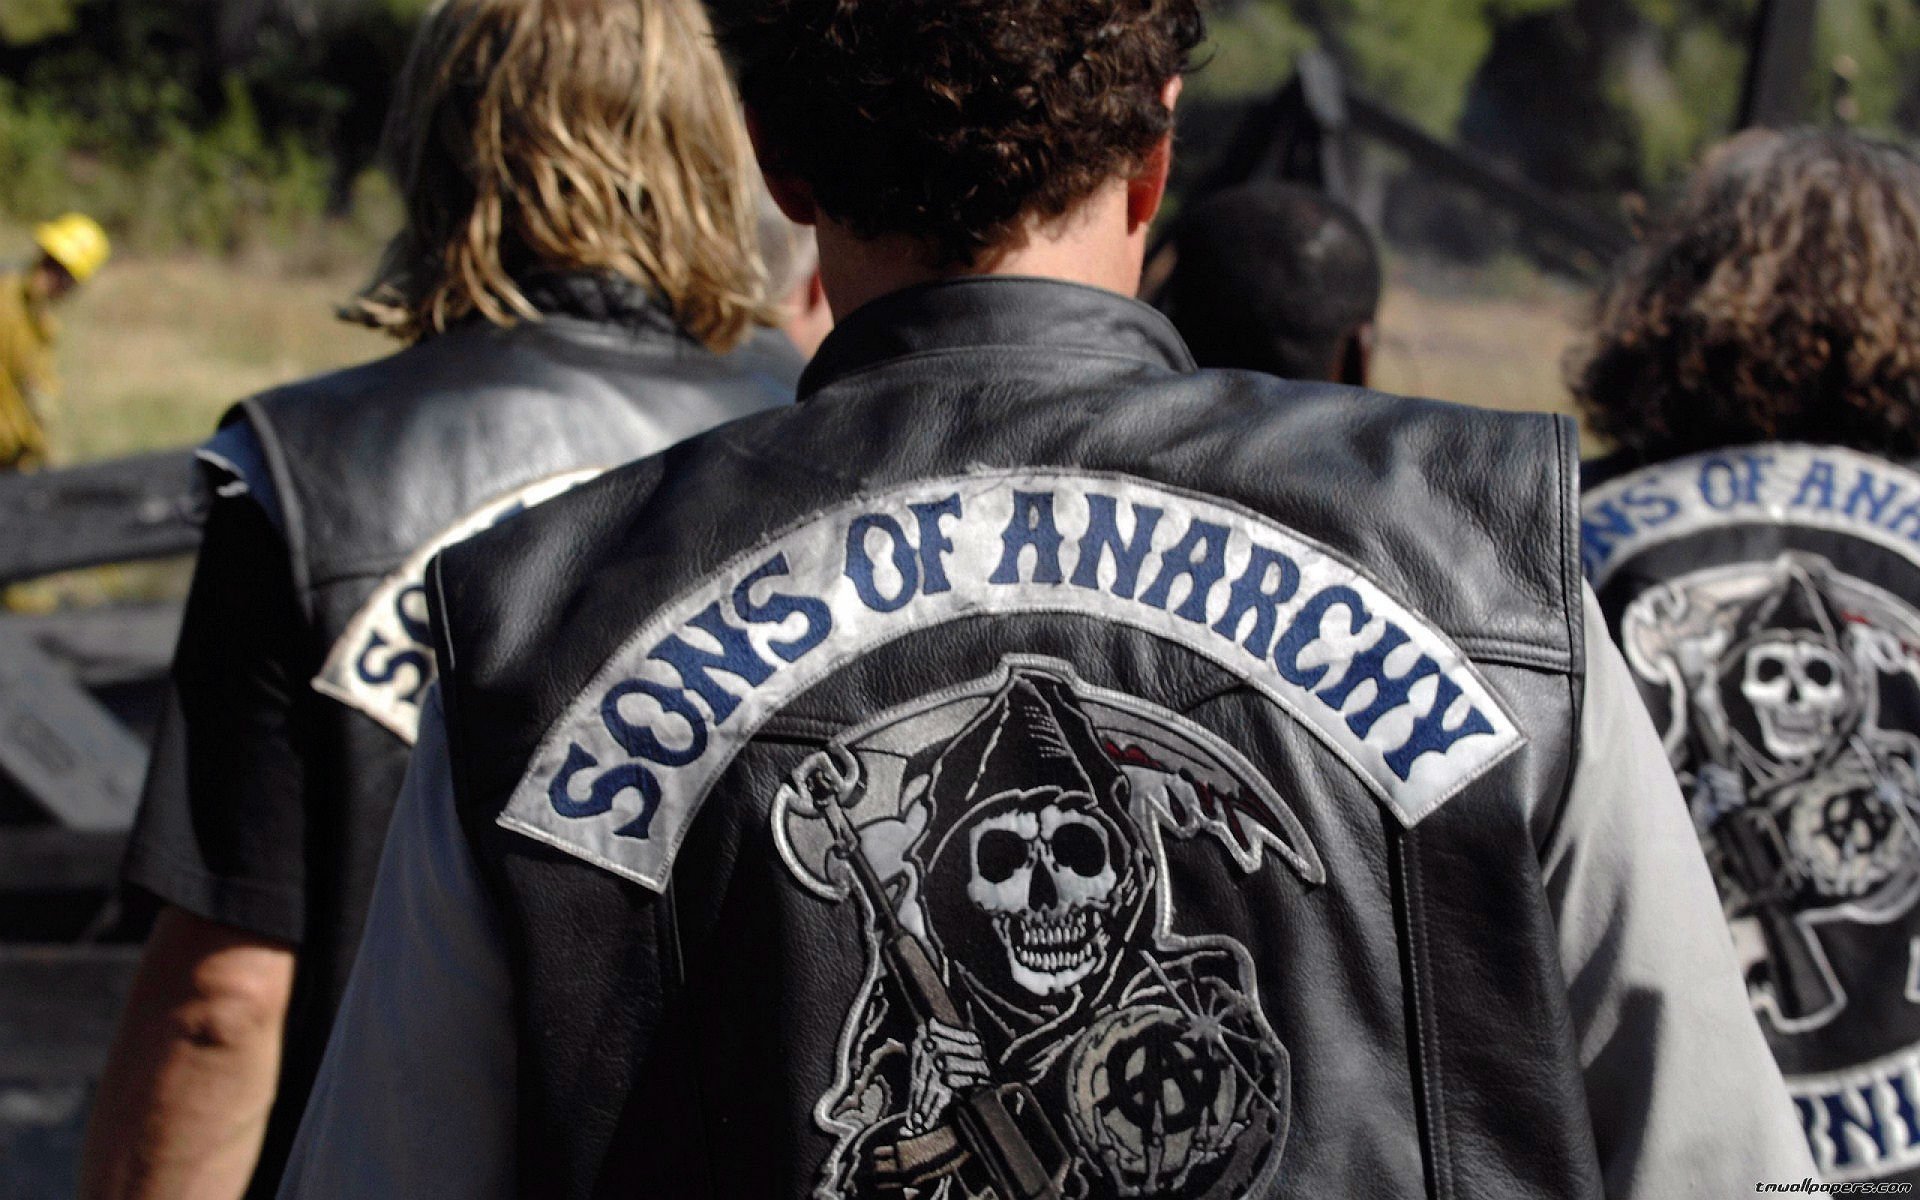 sons, Of, Anarchy, Series, Biker, Crime, Drama, Thriller Wallpaper